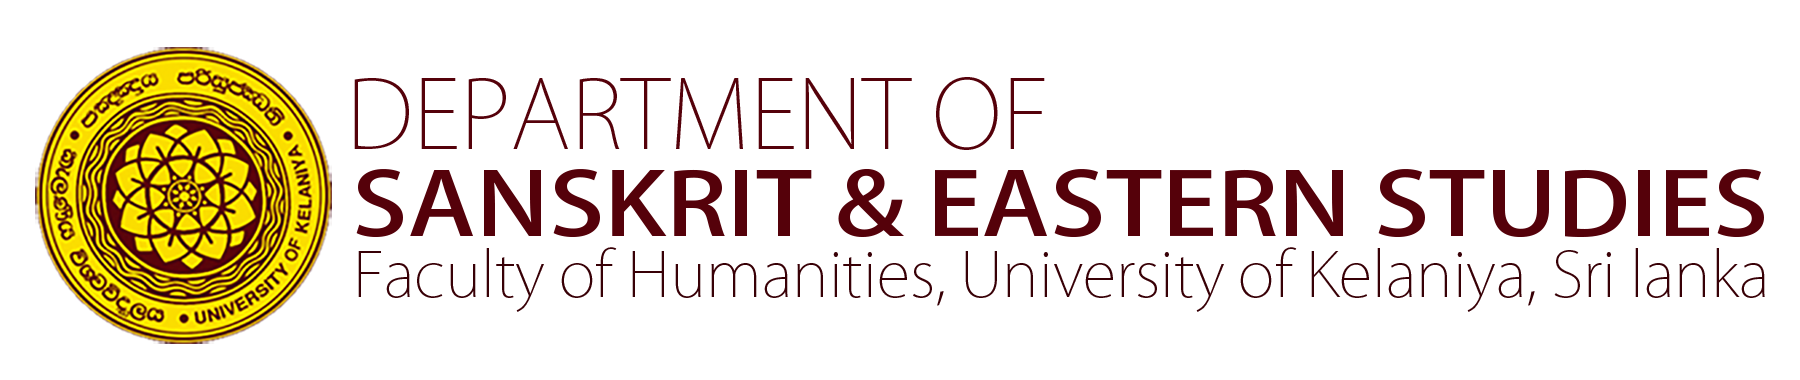 Department of Sanskrit & Eastern Studies